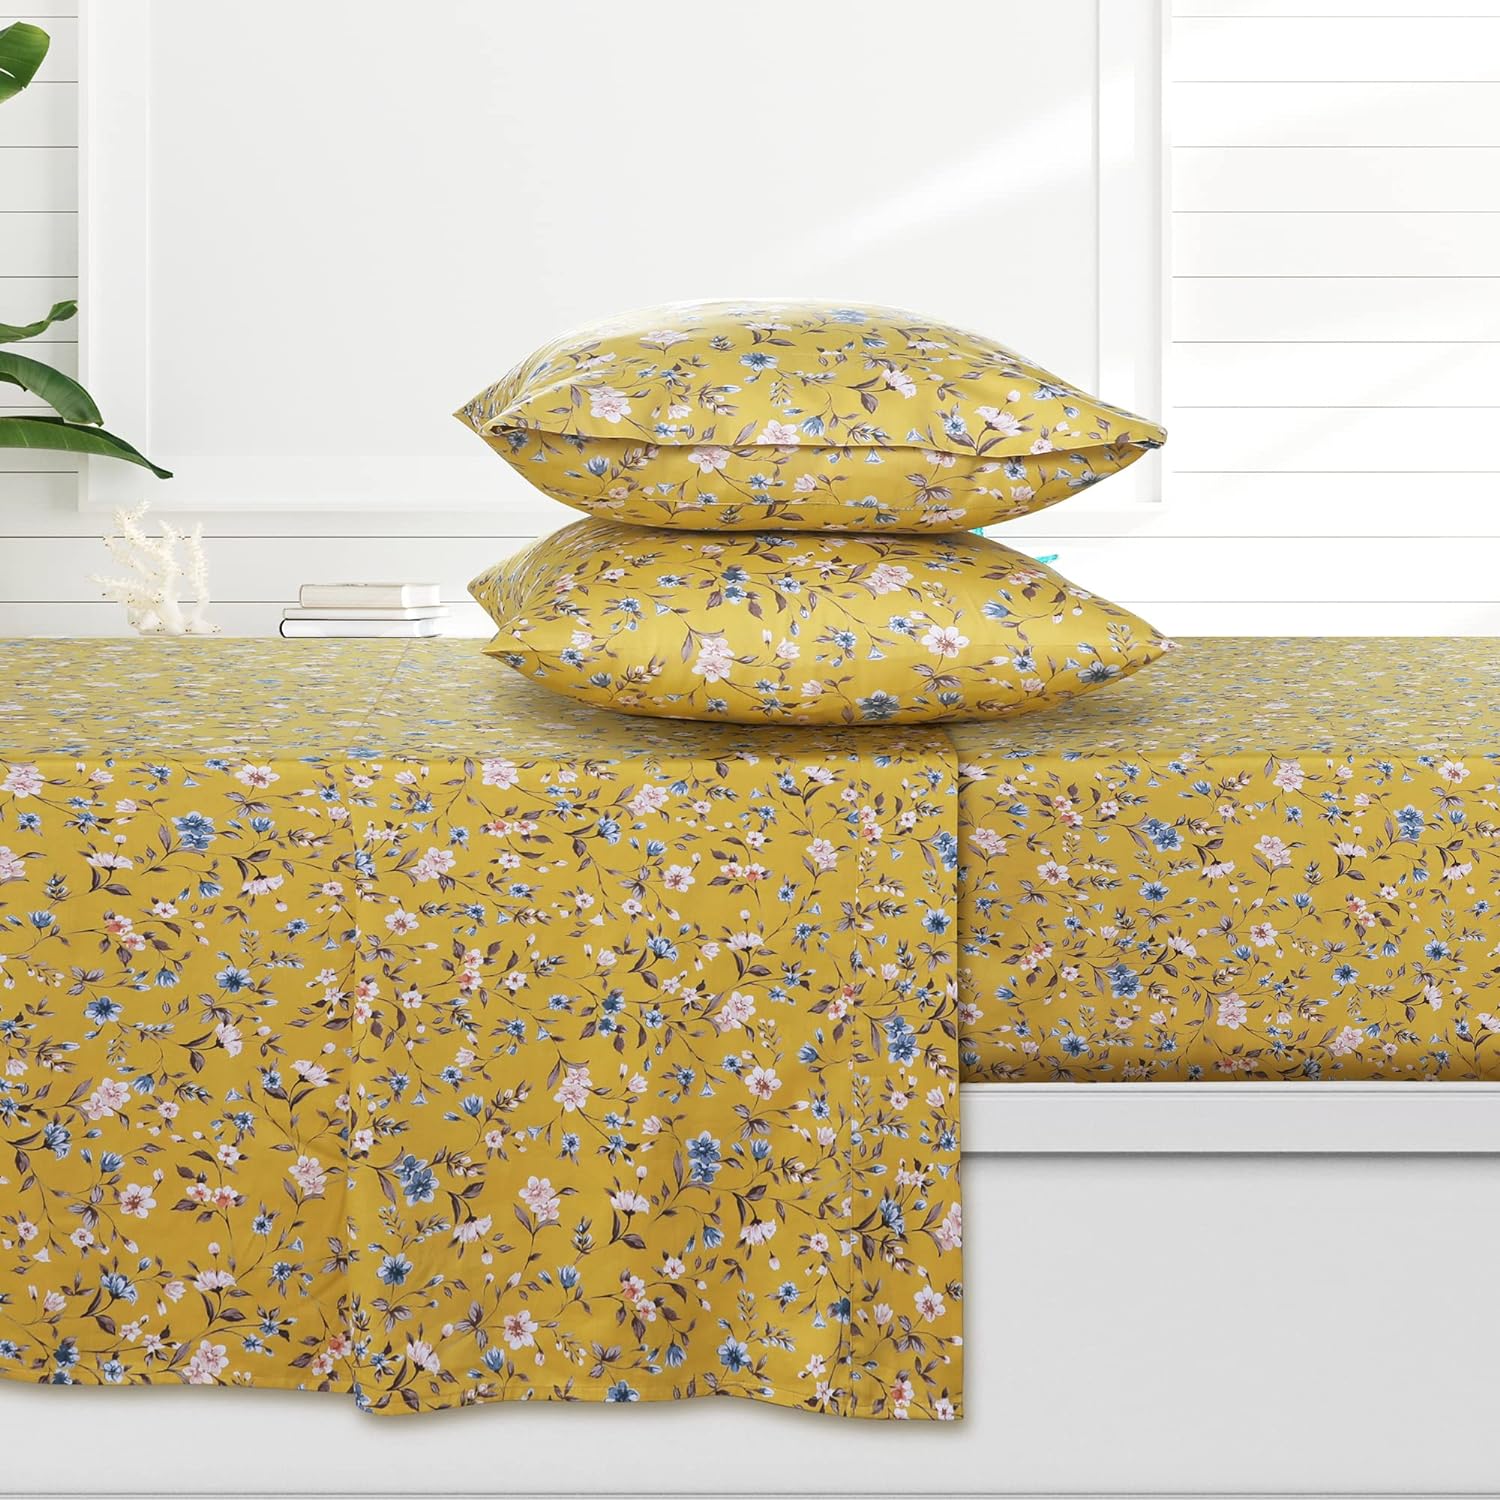 Carolina 300 Thread Count Organic Cotton Deep Pocket Bed Sheet Set, Fits up to 19 inch Mattress - Queen, Yellow